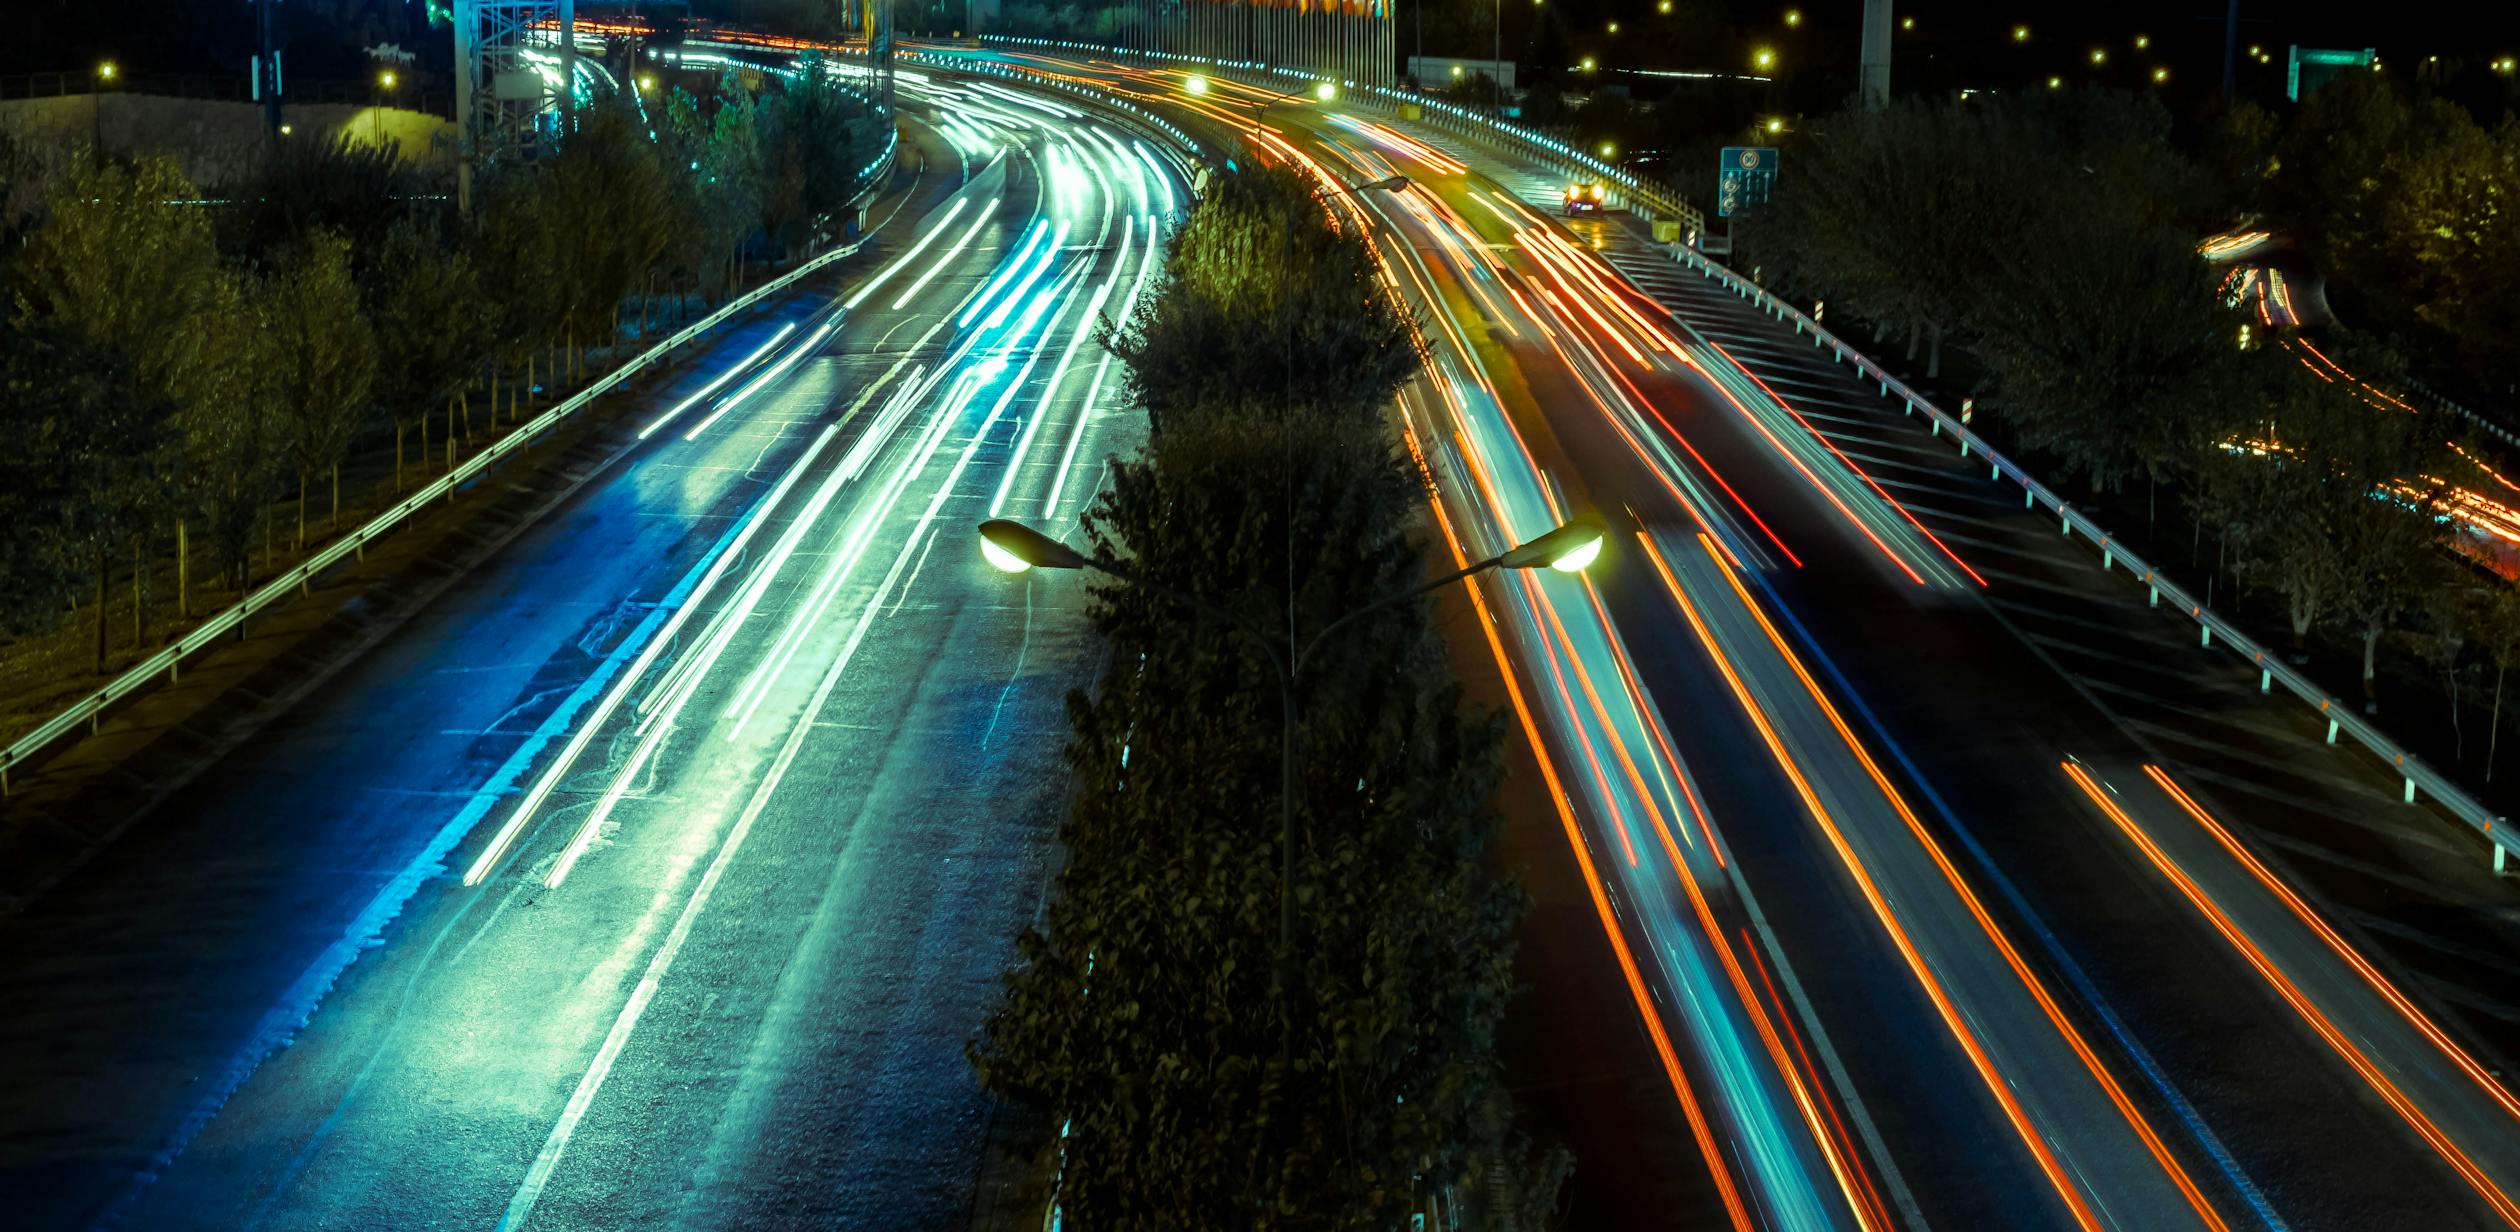 Free stock photo of car lights, cars, city